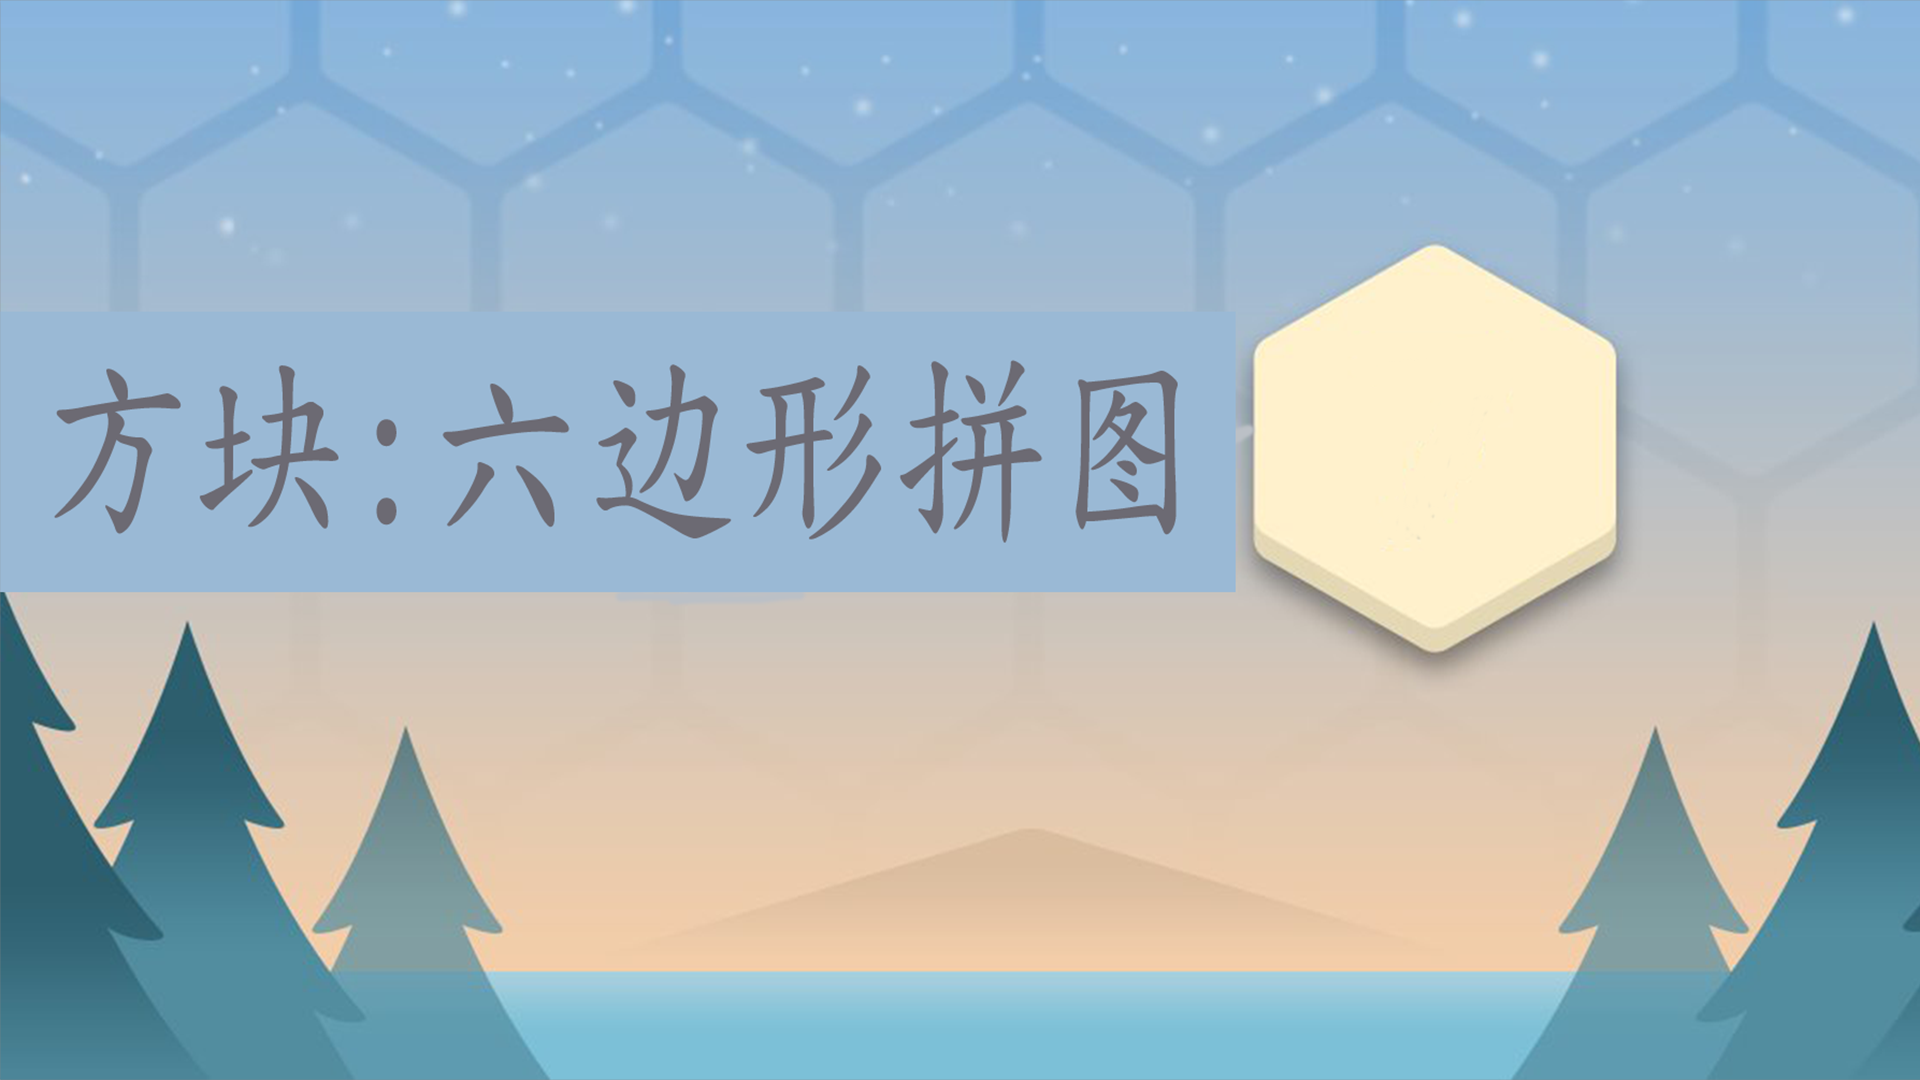 Banner of 큐브: 육각형 퍼즐 